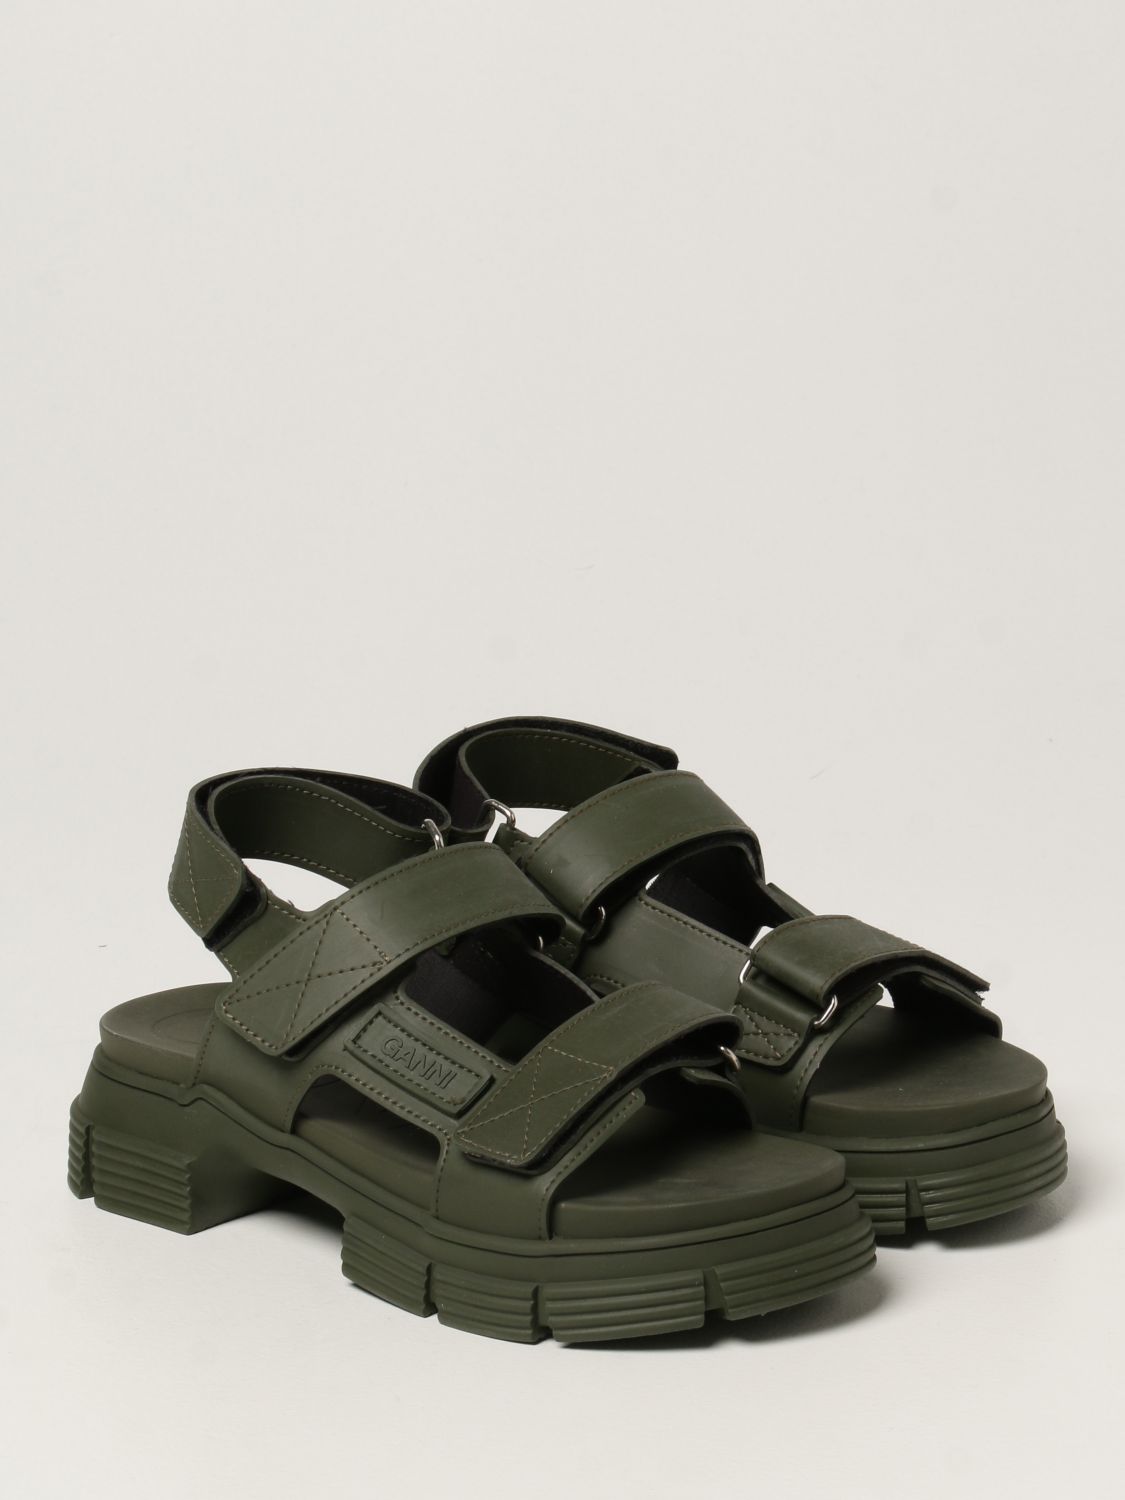 Sandales plates Ganni: Chaussures femme Ganni vert militaire 2